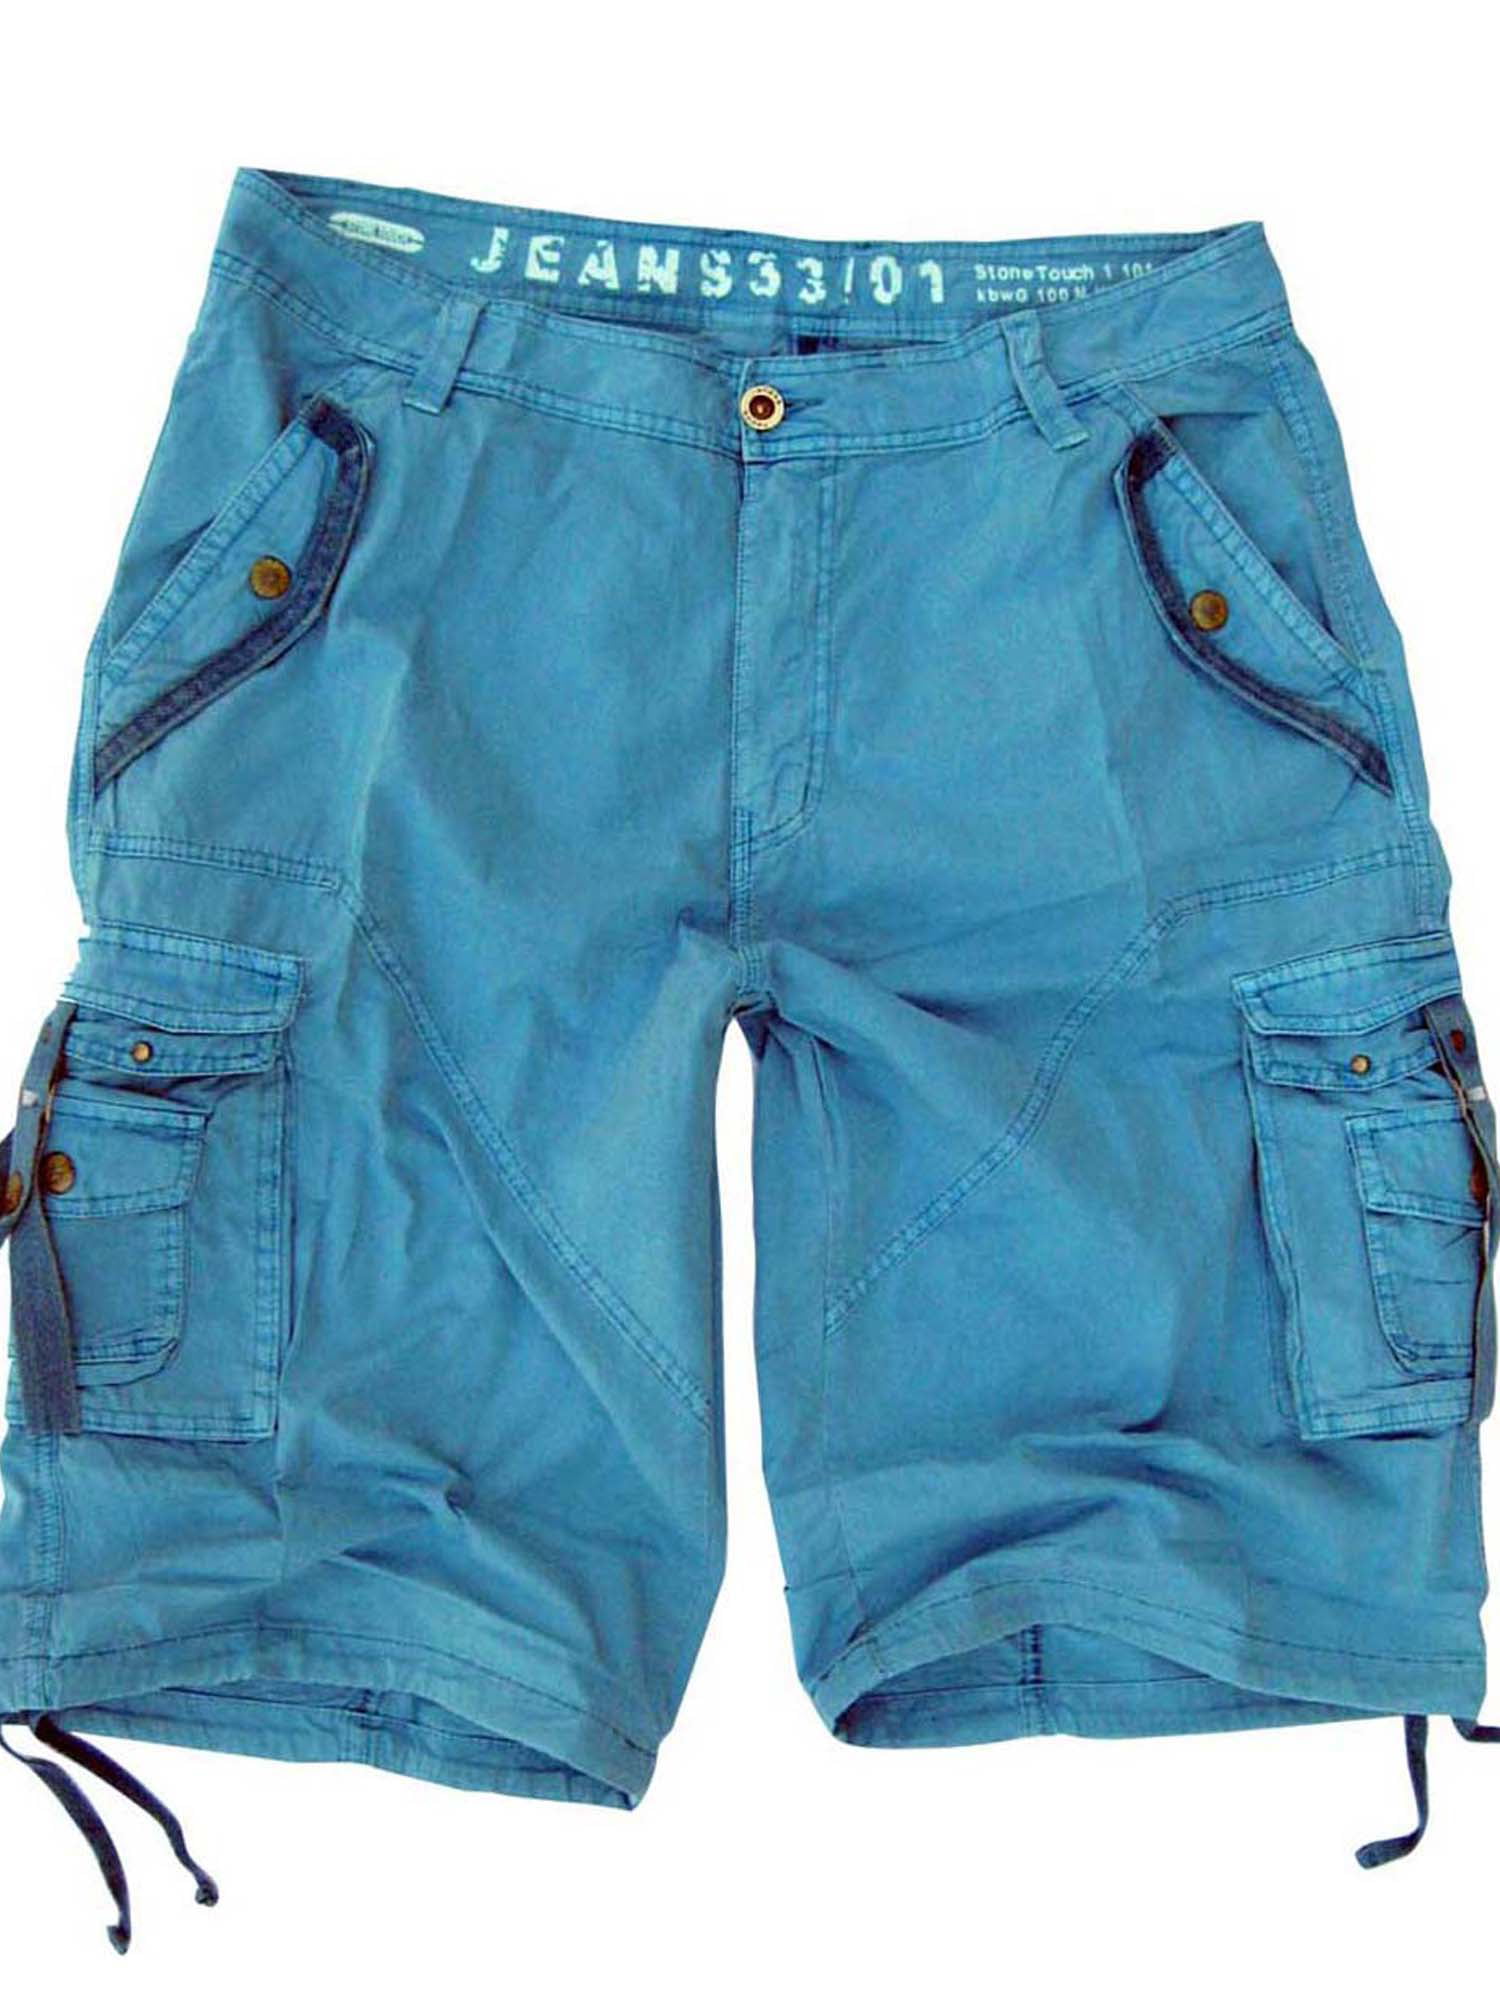 full blue cargo shorts